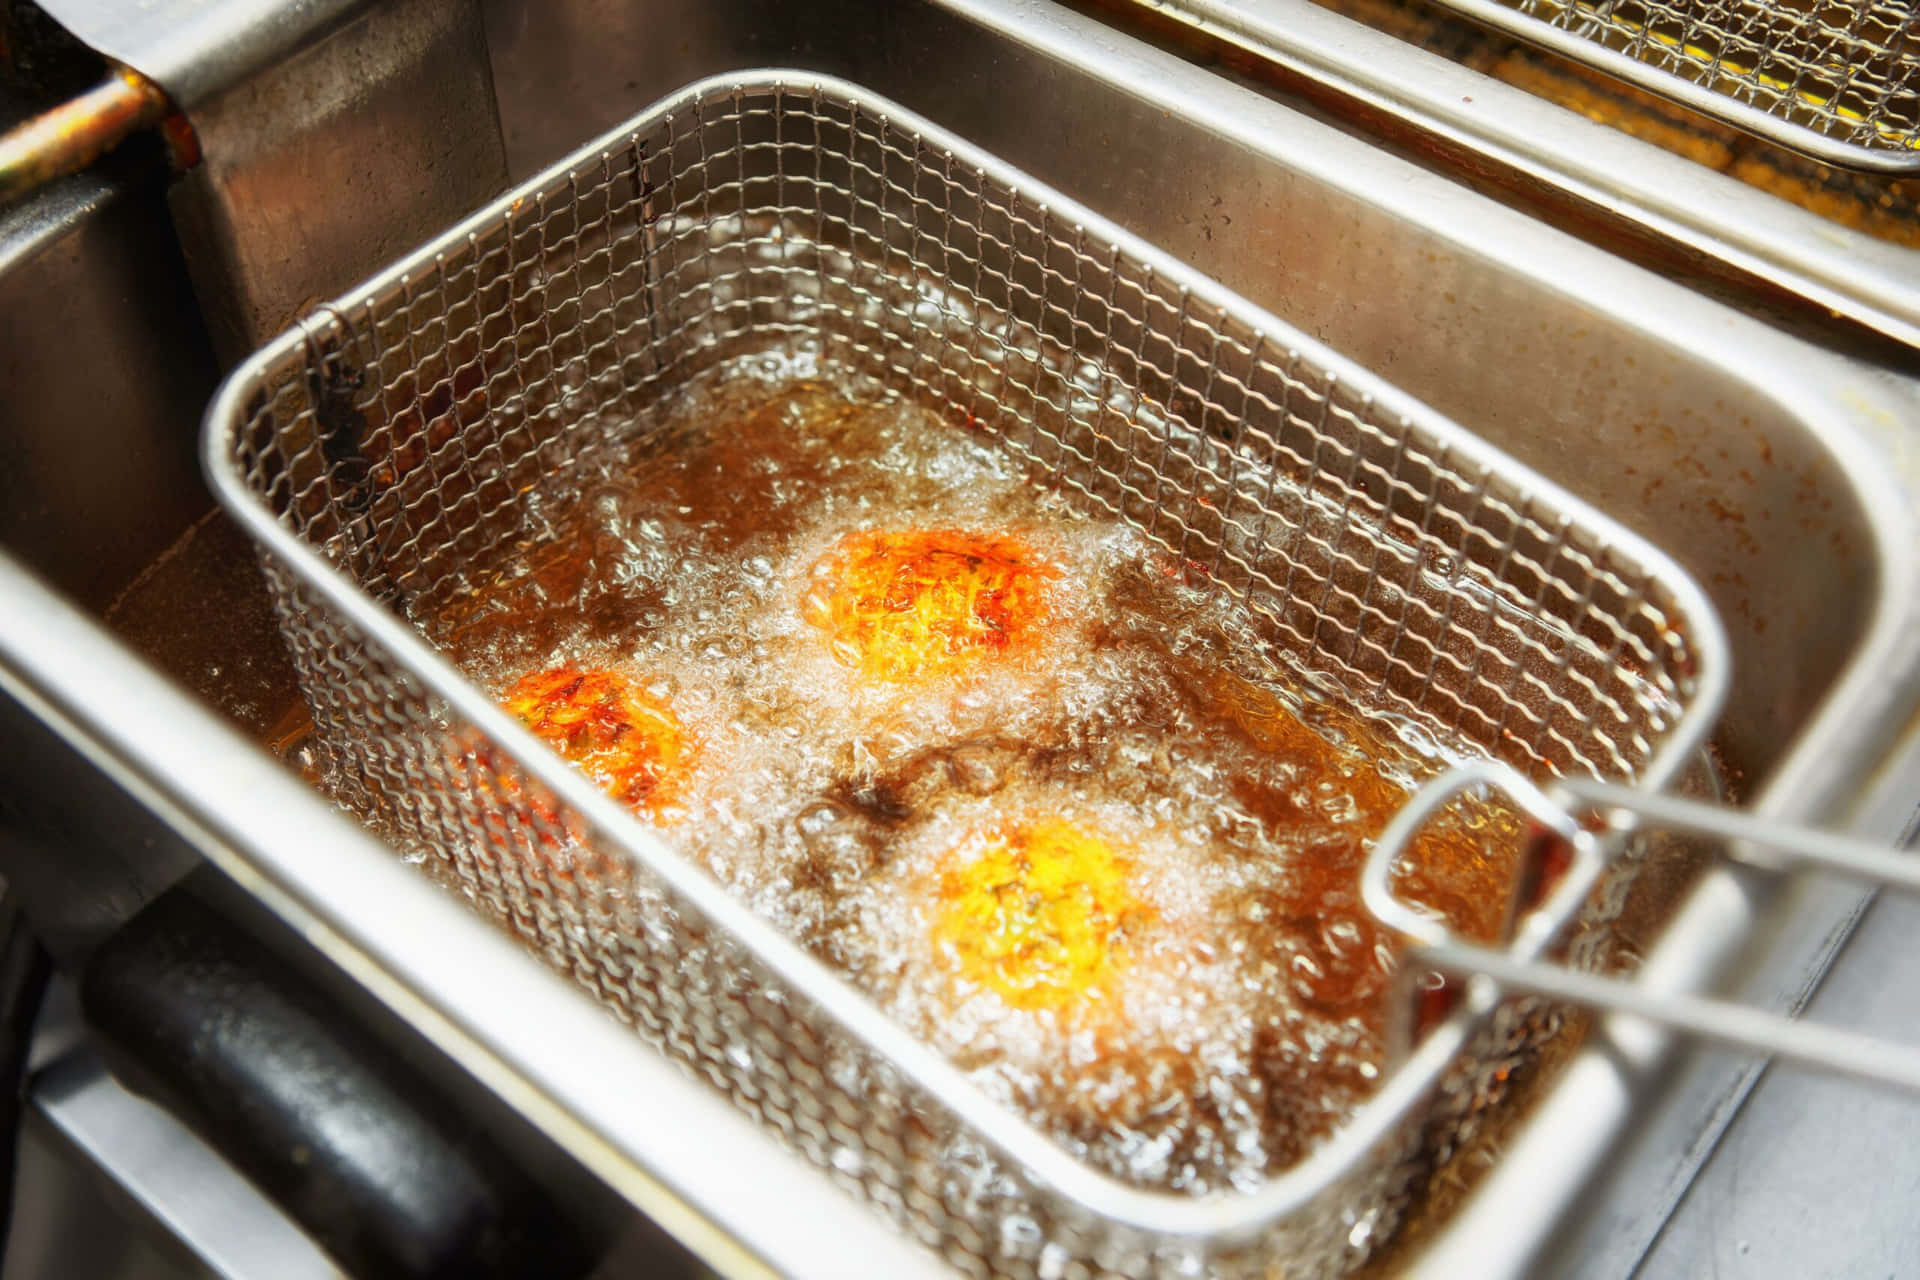 Fried Eggs In A Metal Basket